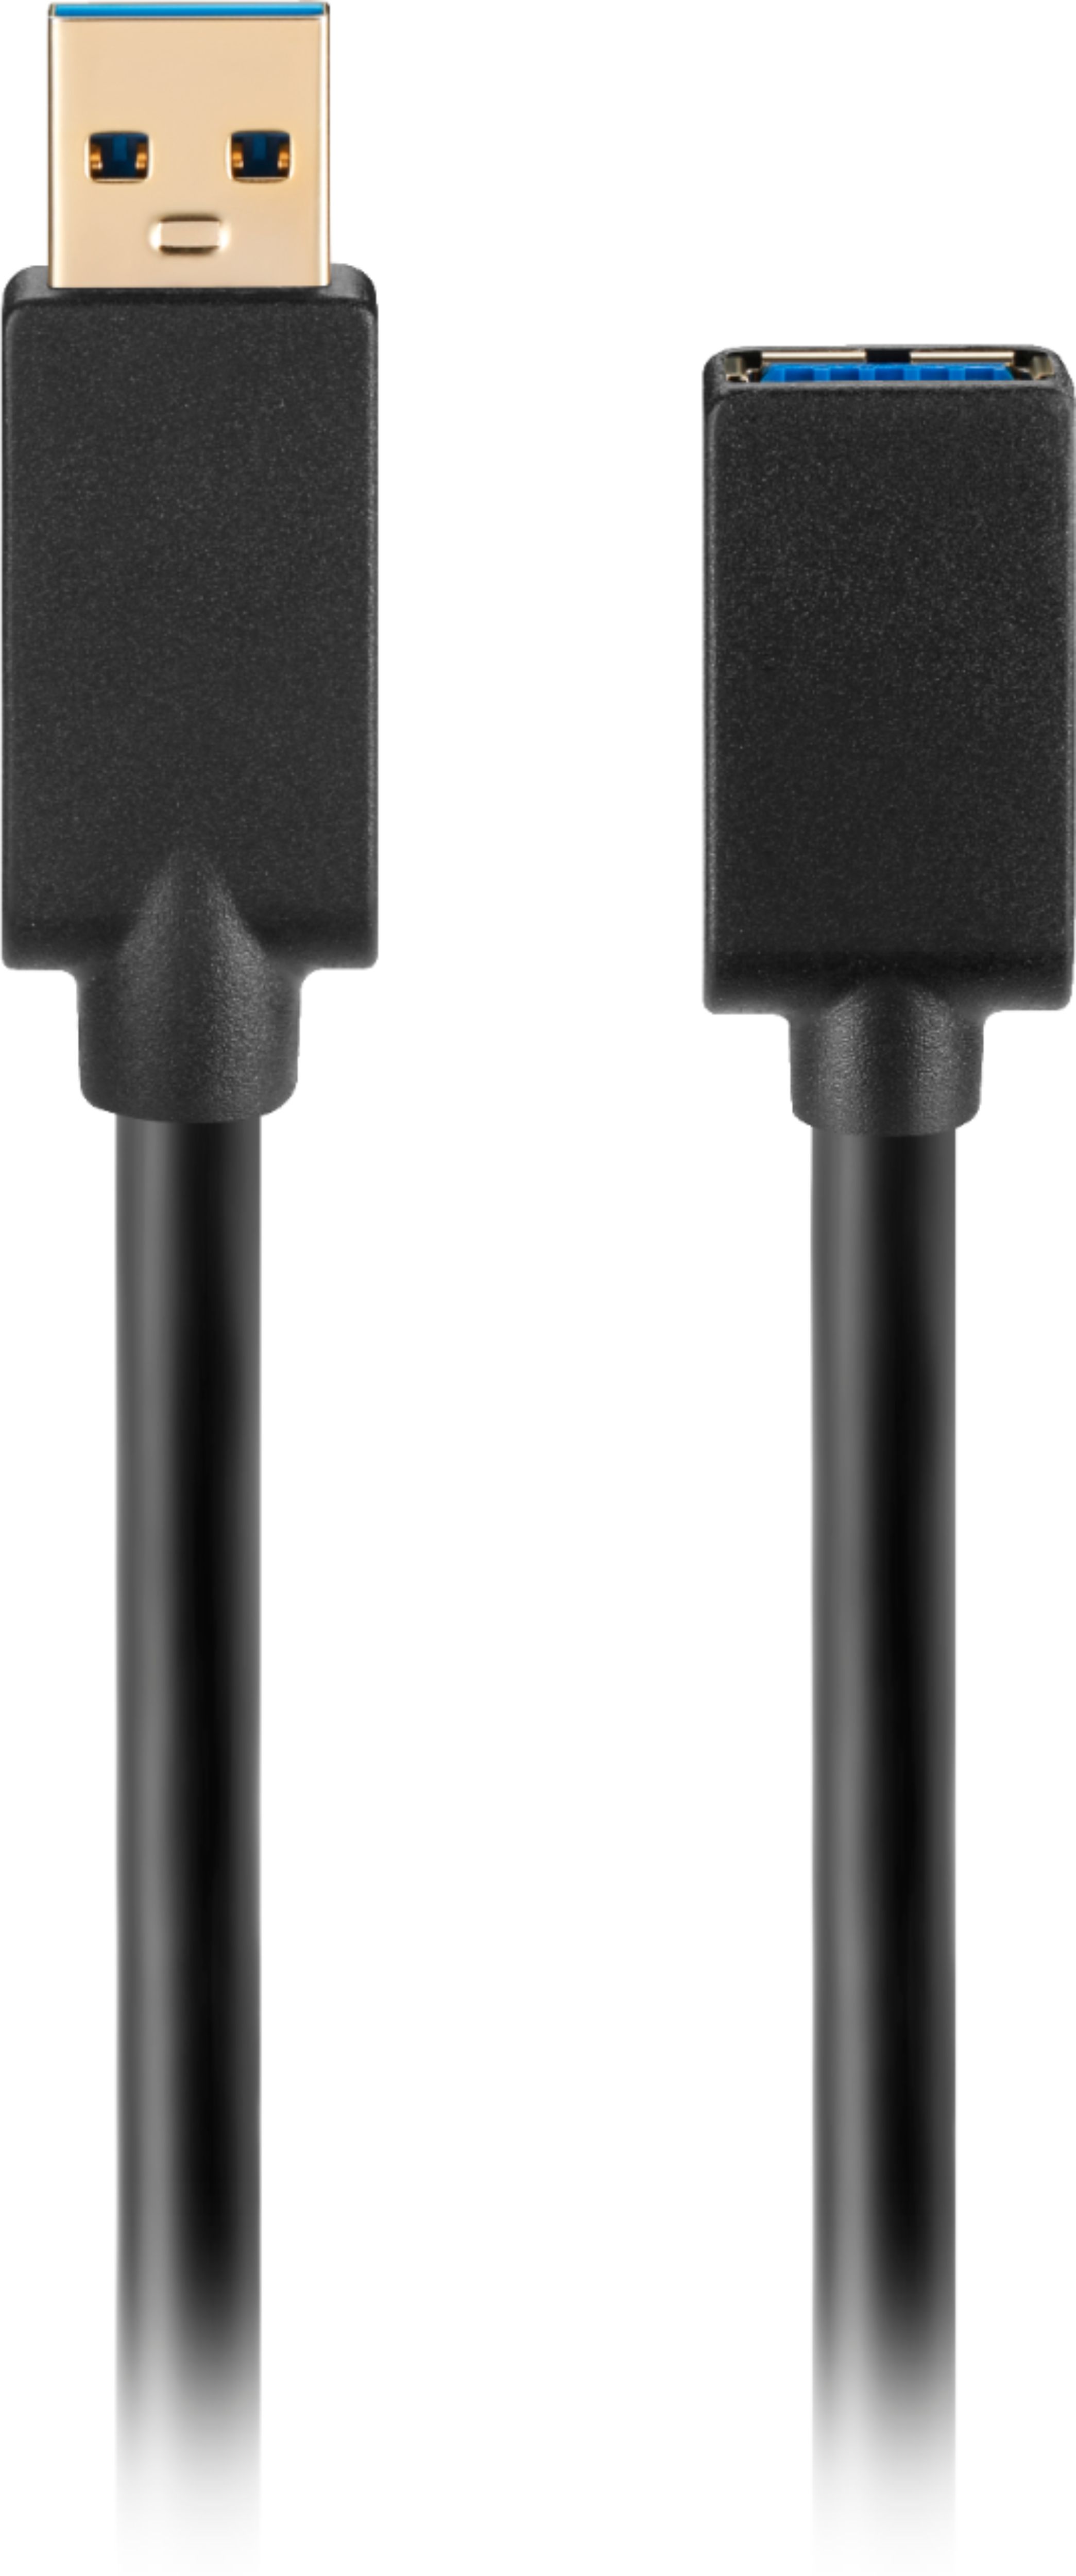 Angle View: Insignia™ - 4-Port USB 3.0 Powered Hub - Metallic Gray